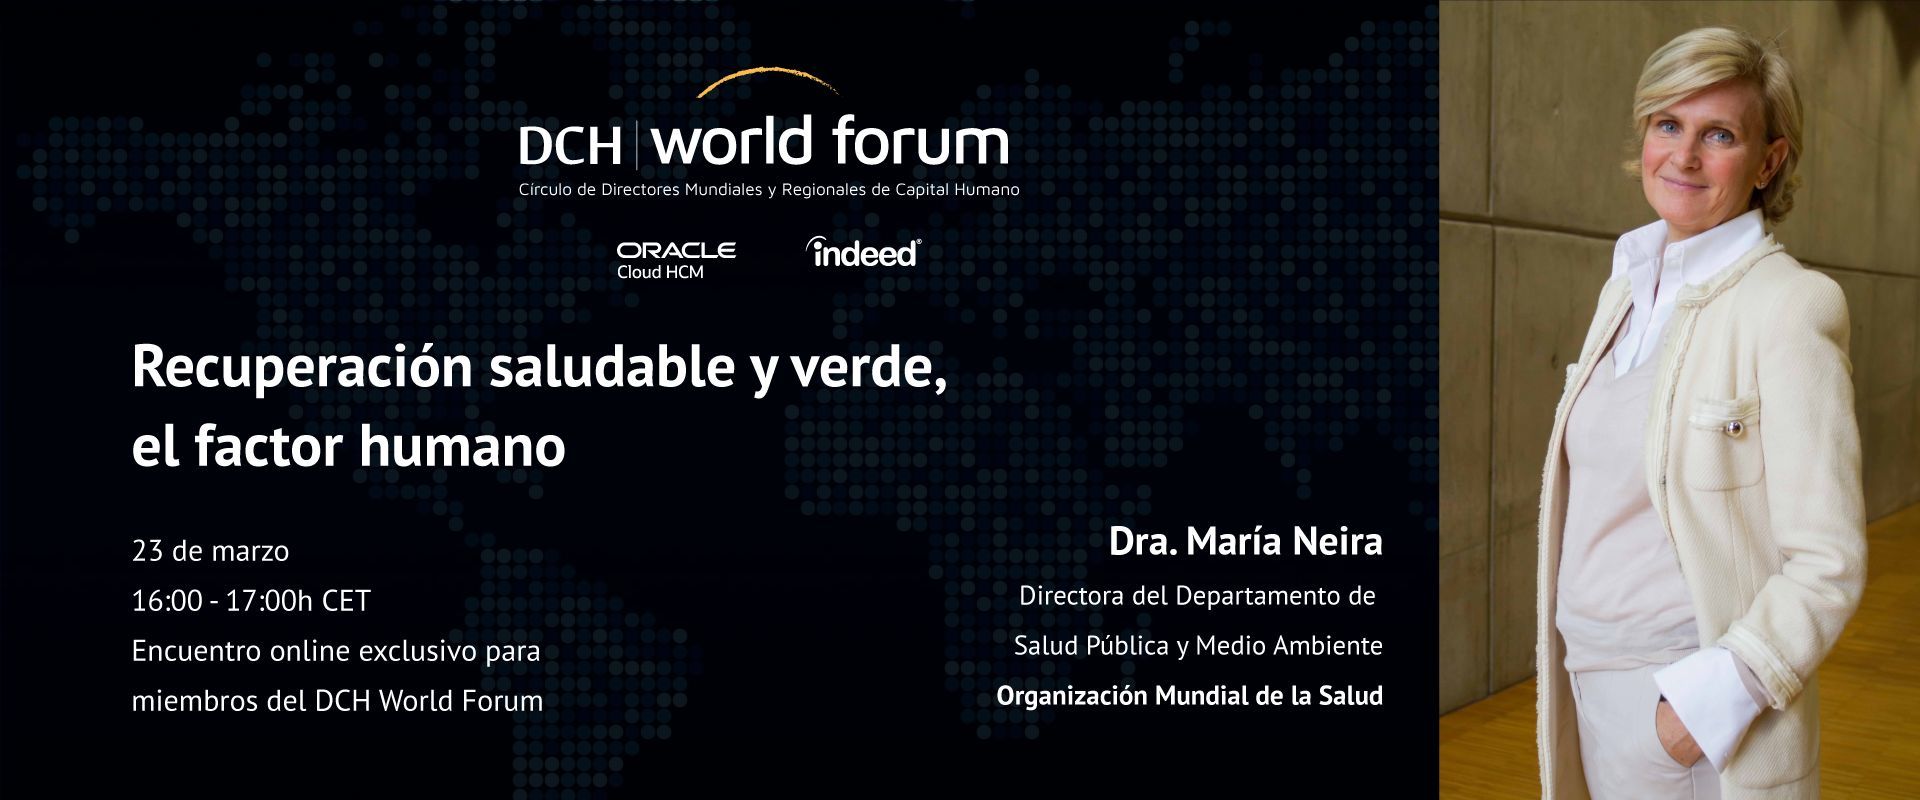 xdch world forum 1